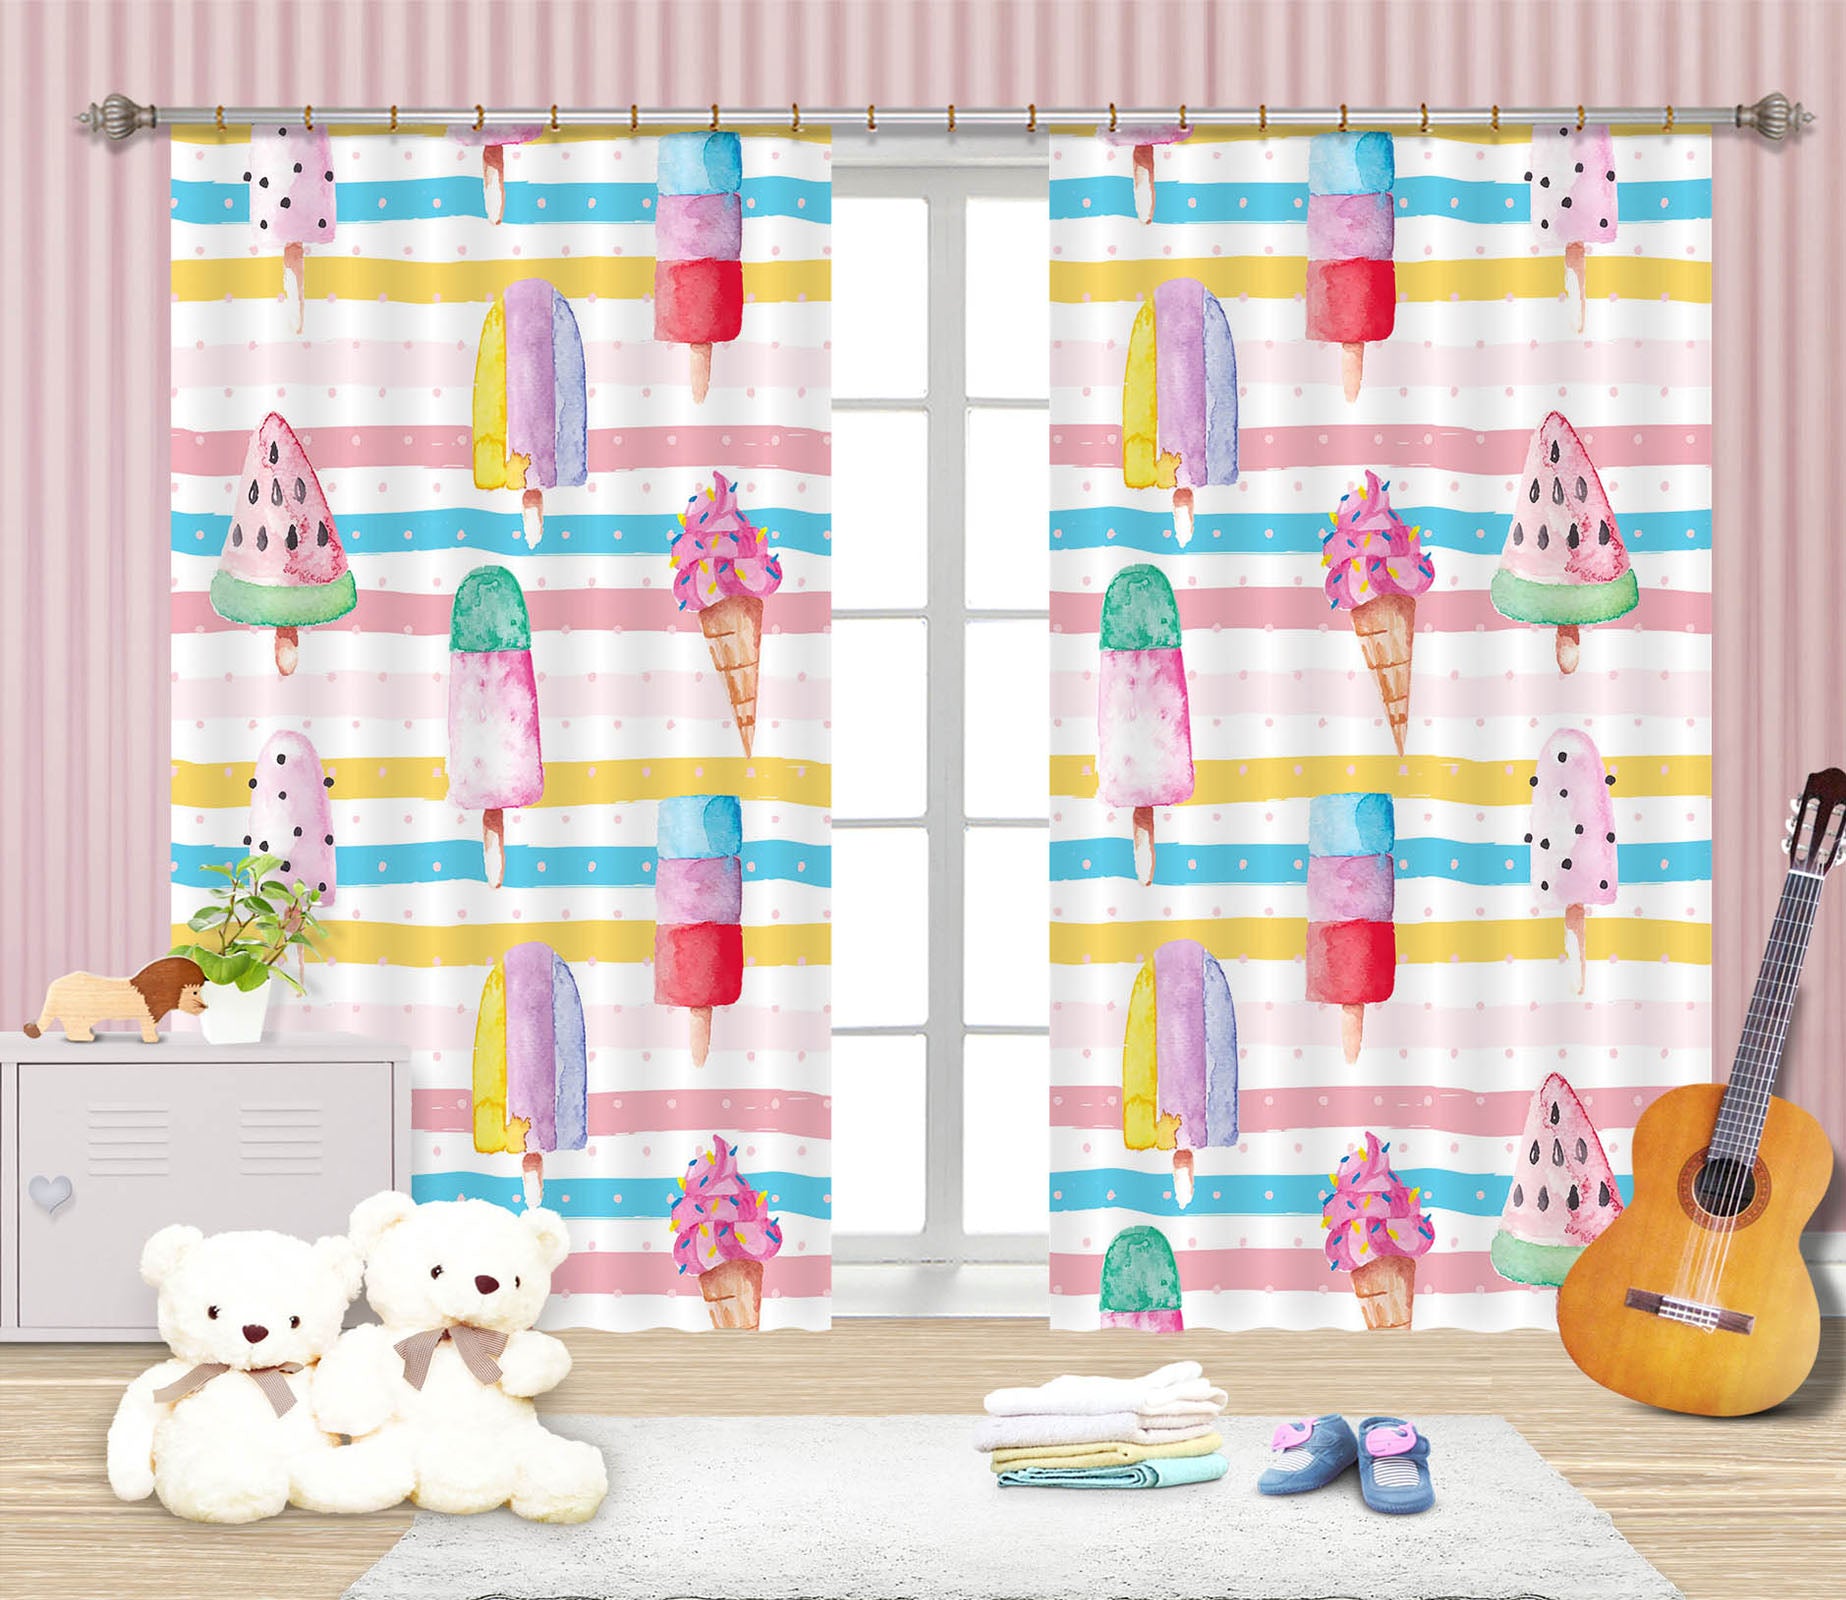 3D Color Ice Cream 240 Uta Naumann Curtain Curtains Drapes